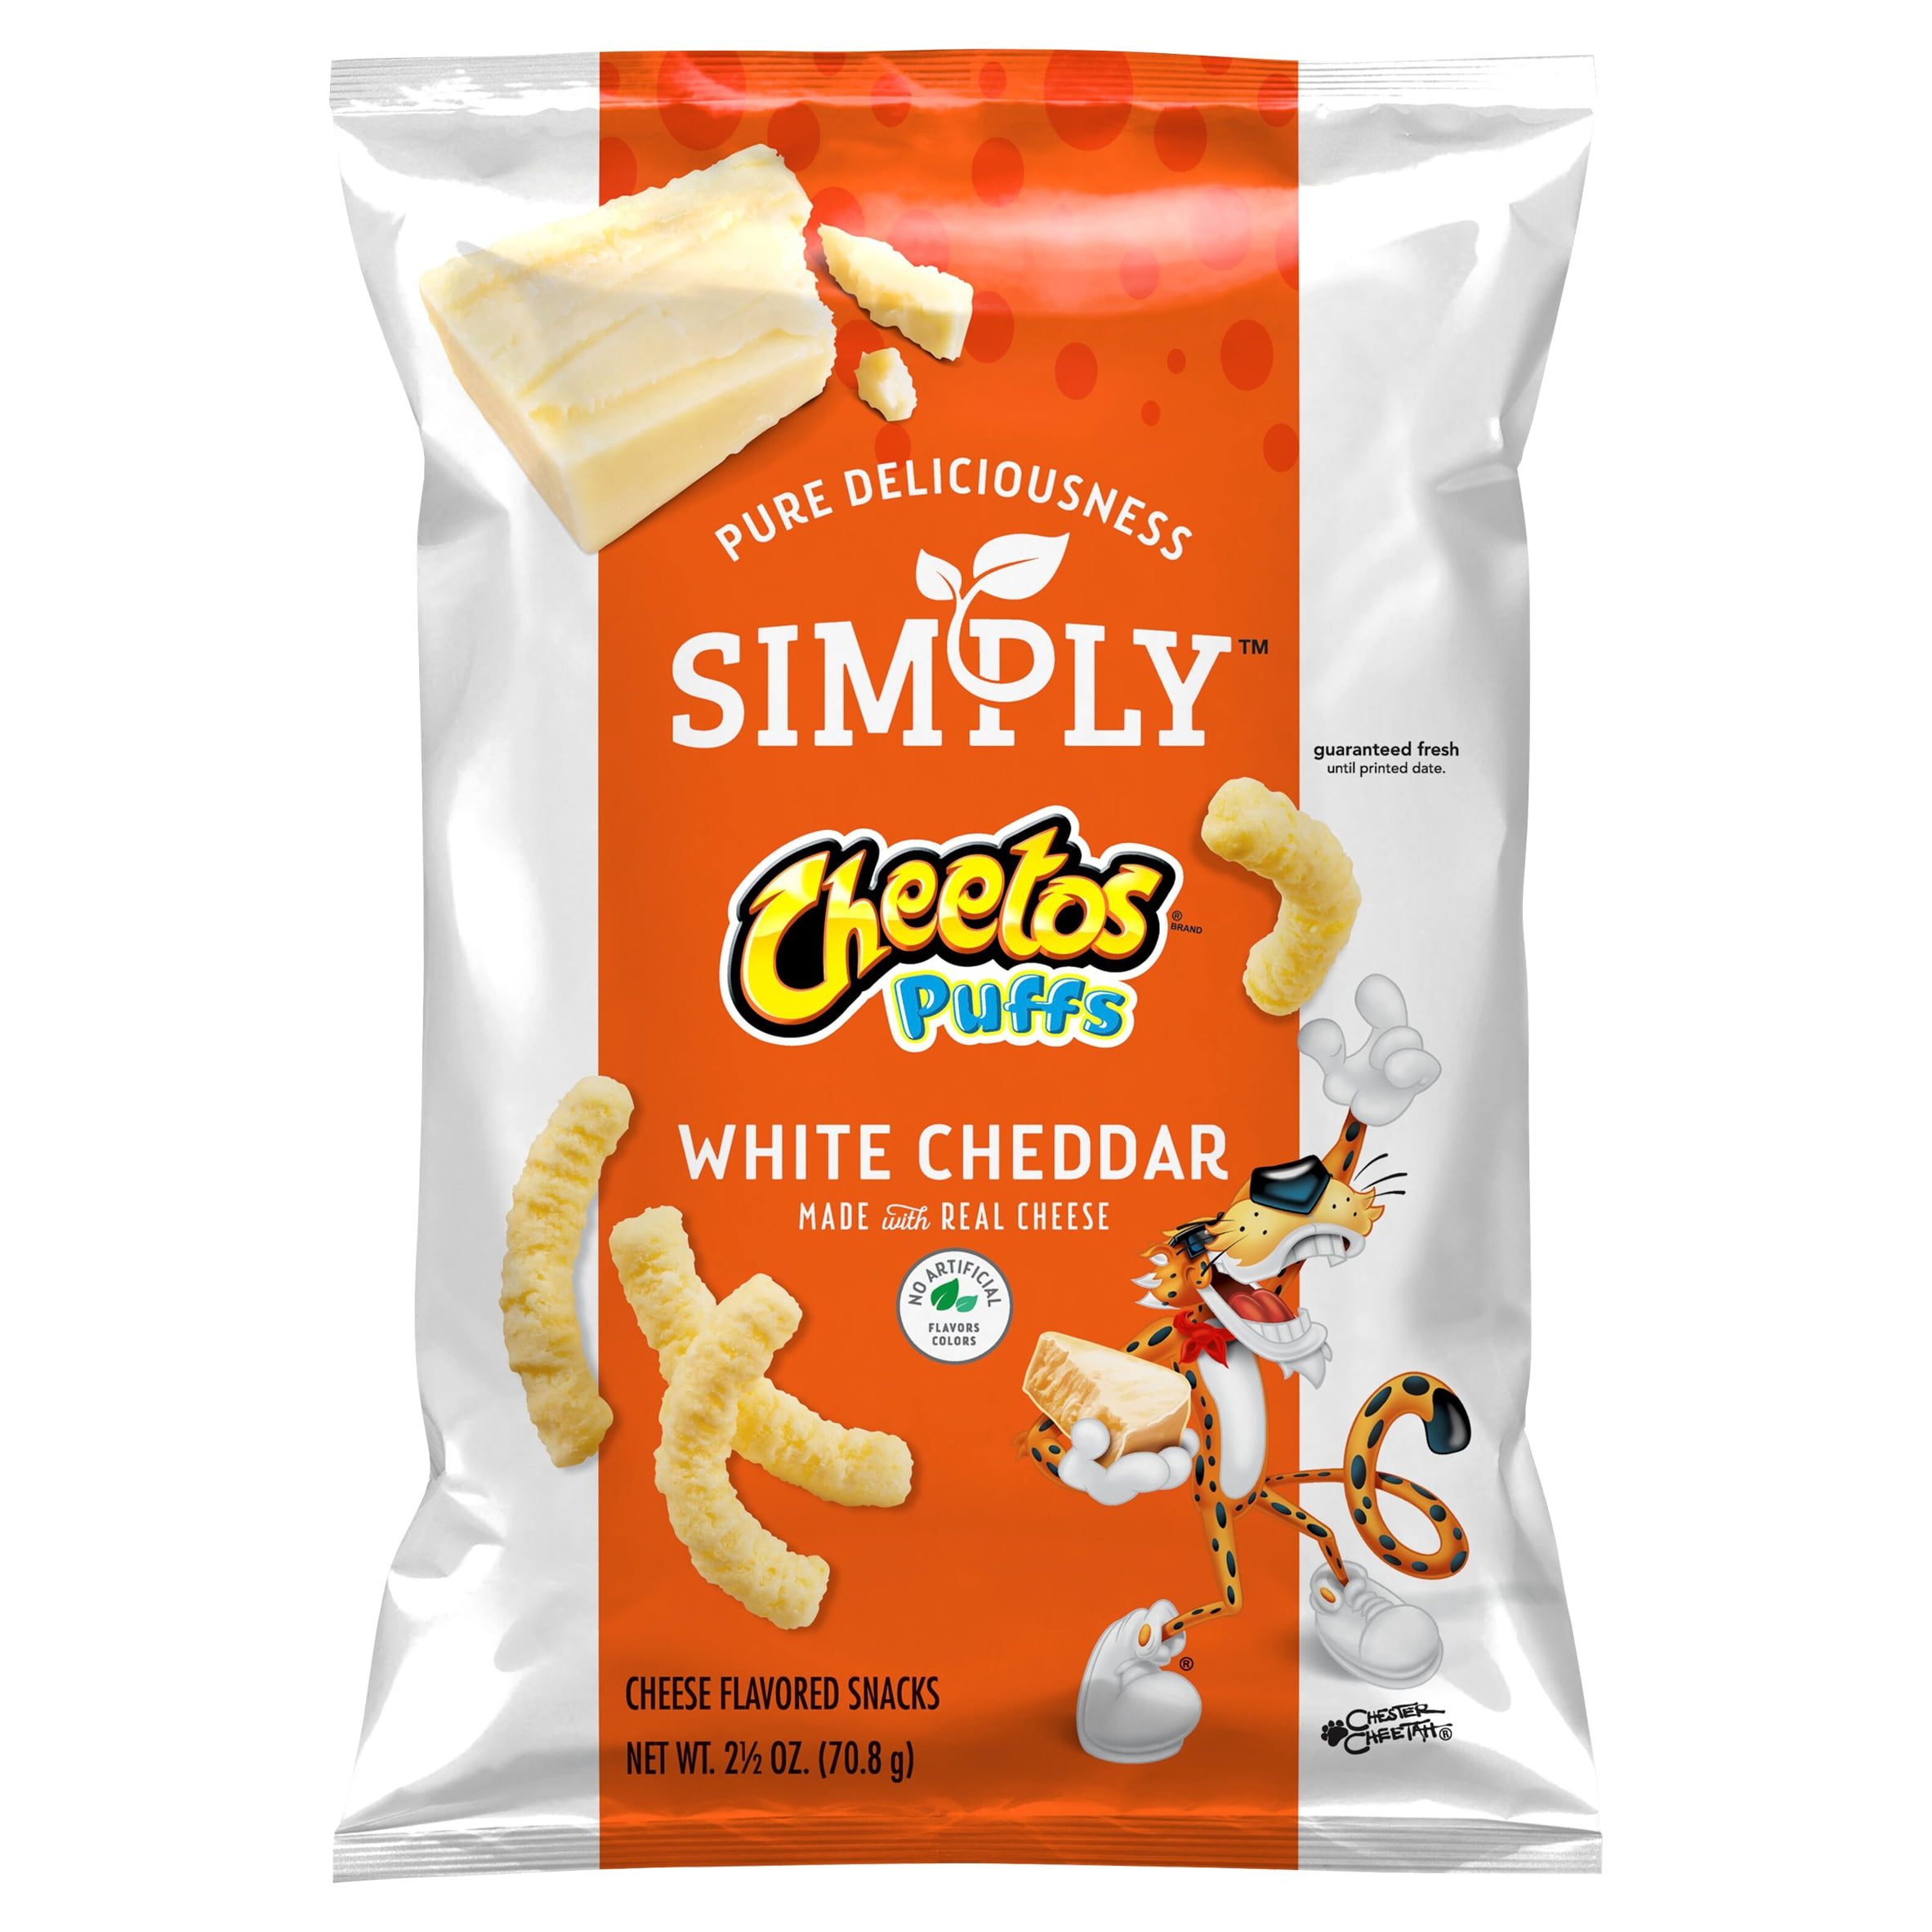 Touhou Sherlock Holmes trolleybus Cheetos Simply Puffs Cheese Flavored Snacks White Cheddar 2.5 oz -  Walmart.com